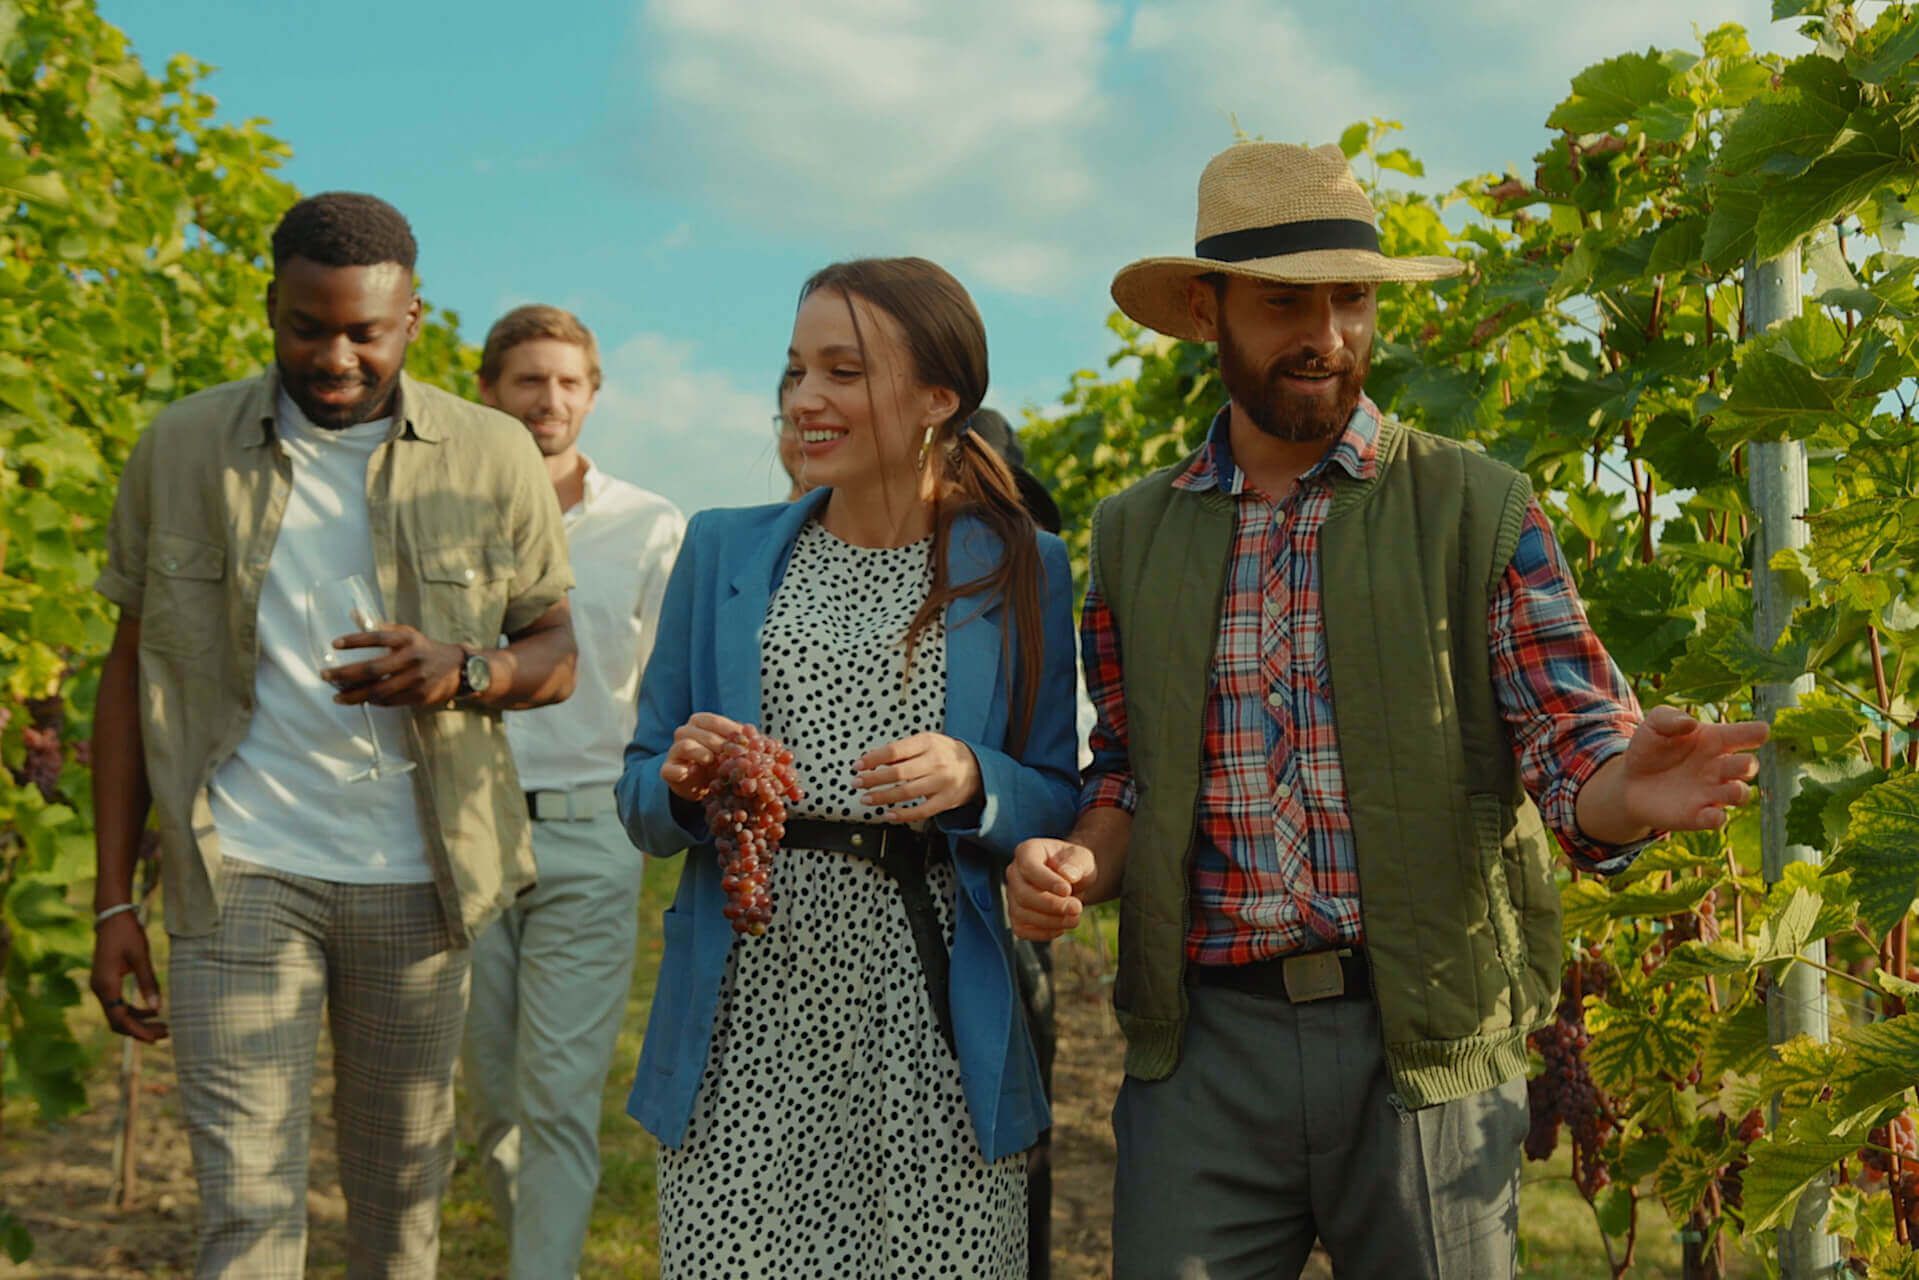 a group of people walking through a vineyard